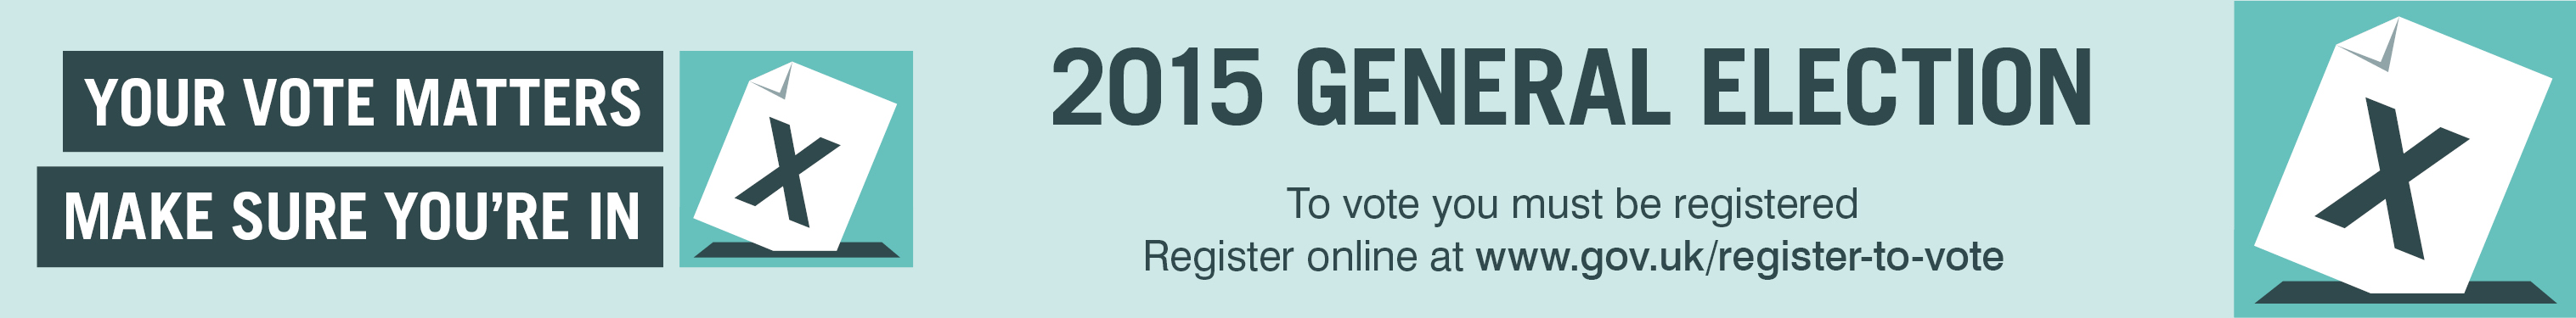 Election Comm Registration-web-banner-for-general-audience